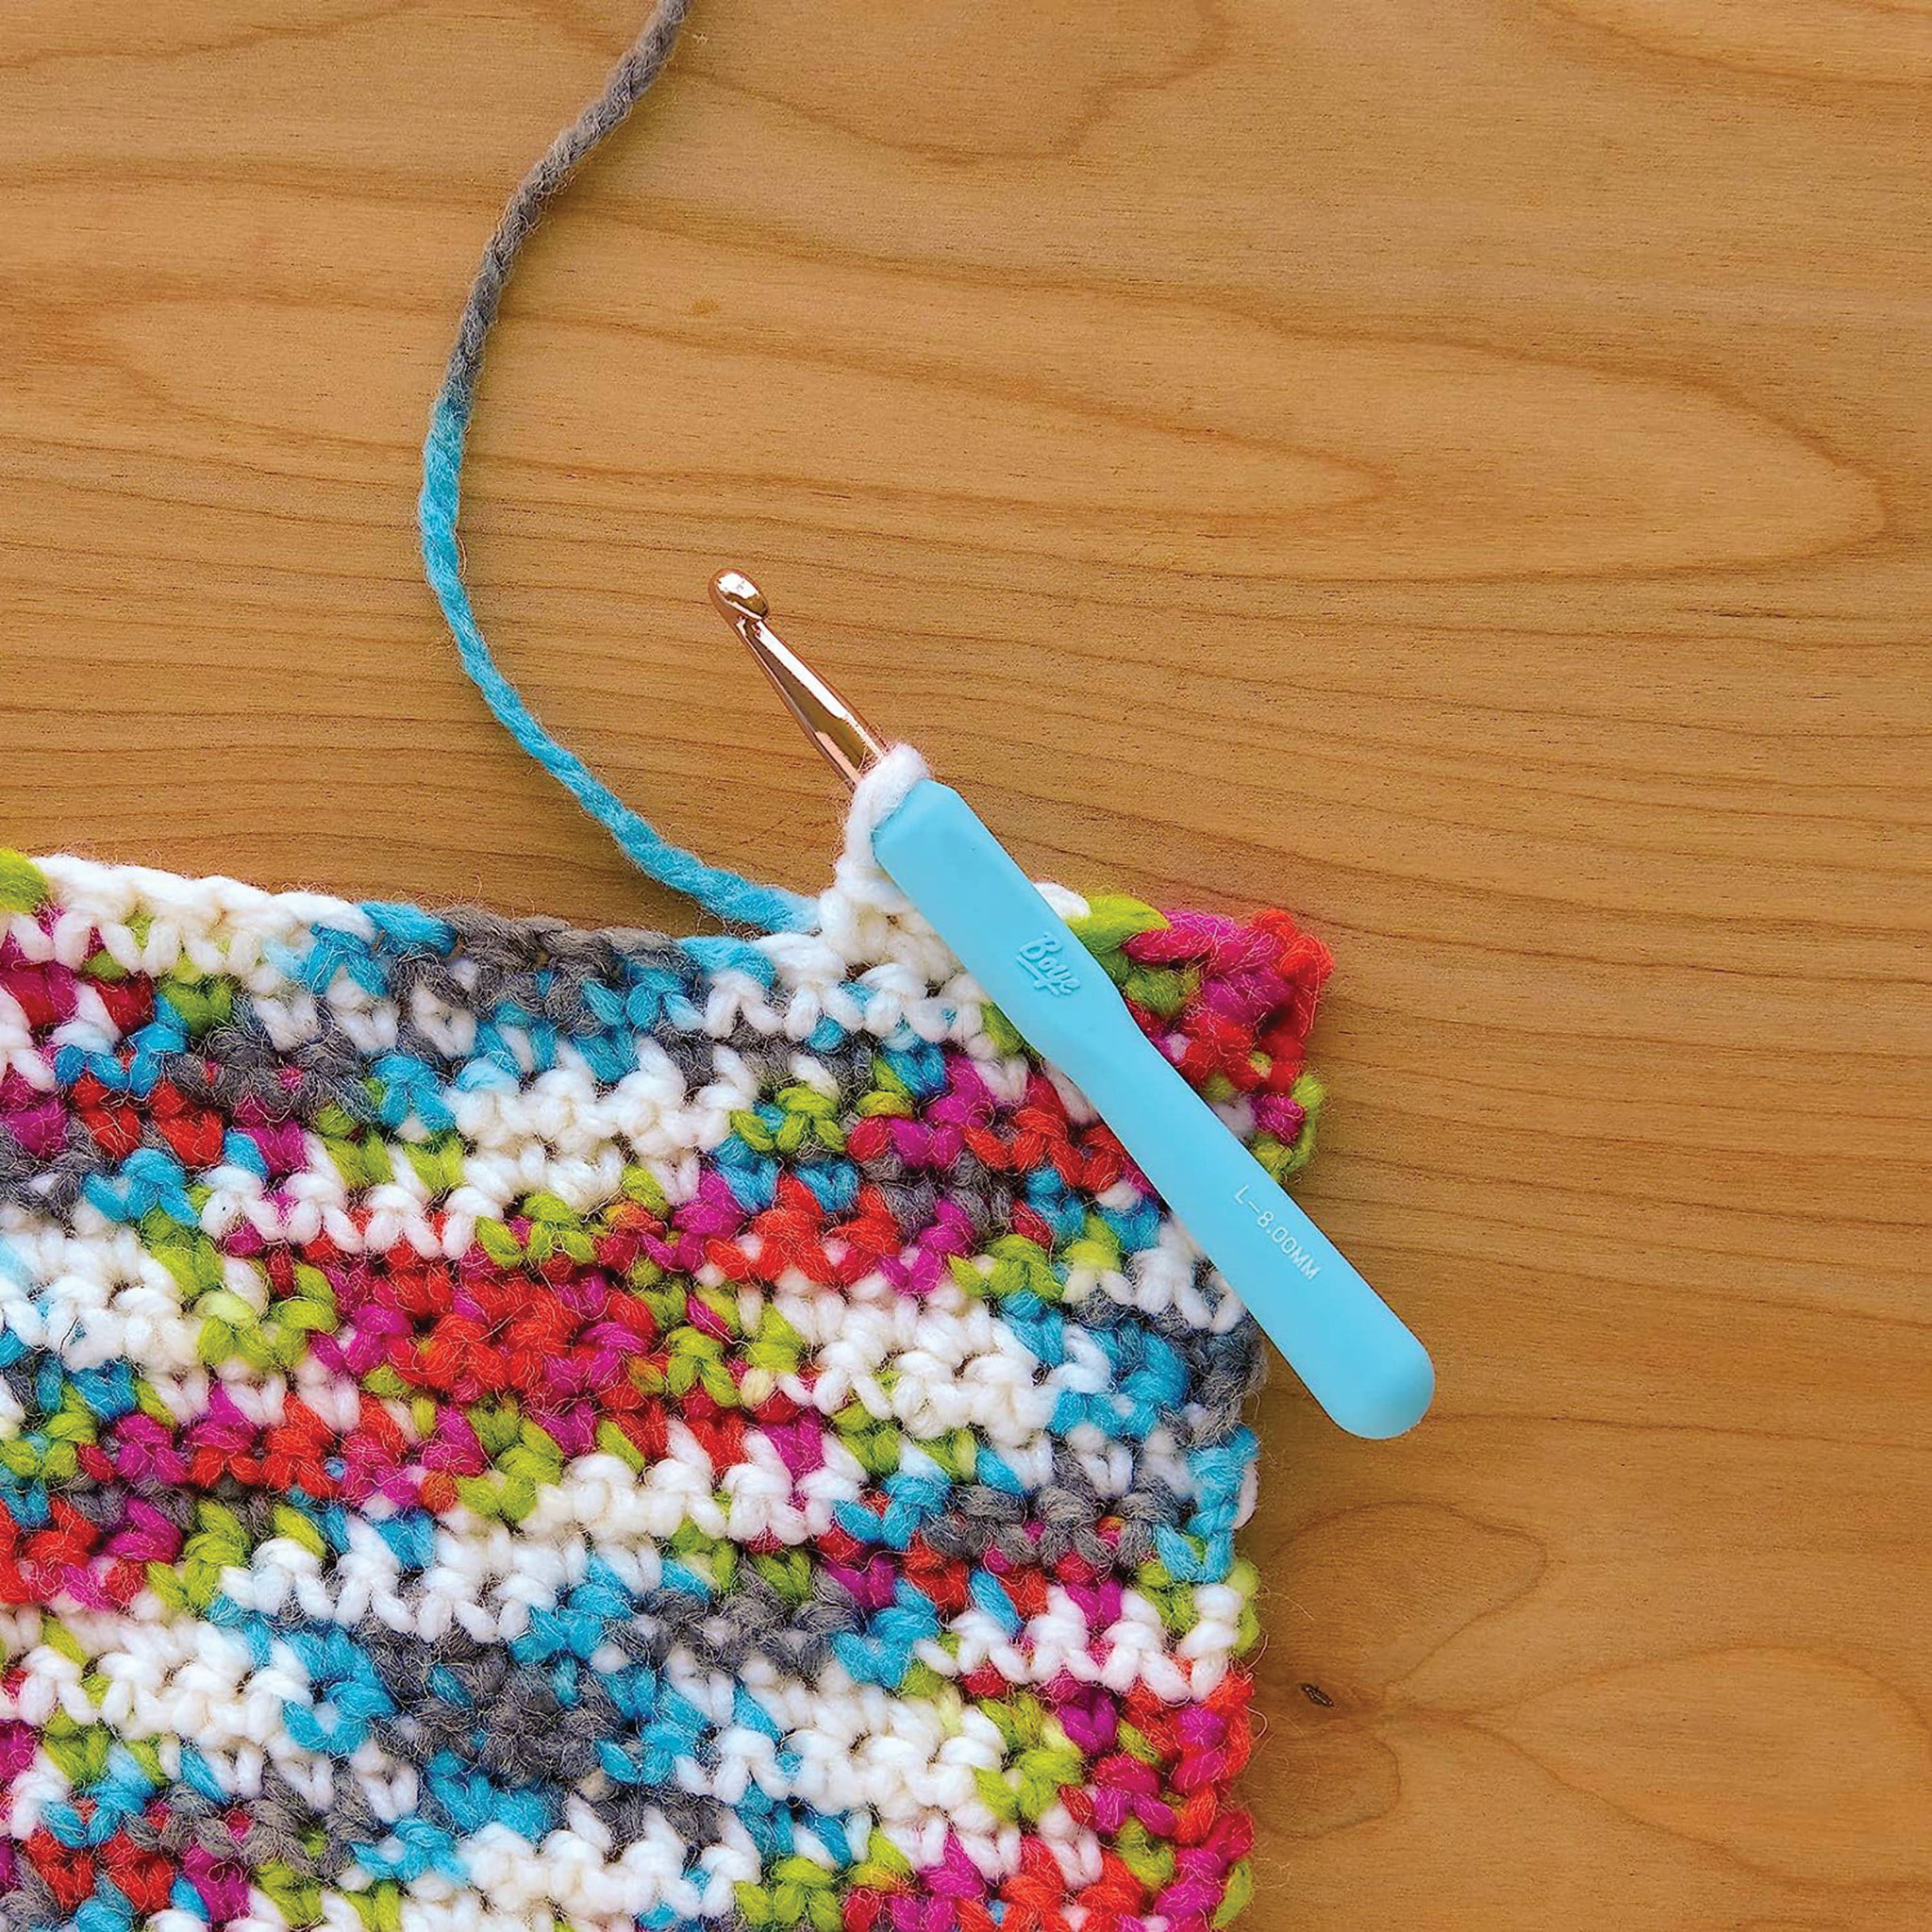 Boye Ergo Crochet Hook Set - Warm, Pkg of 4